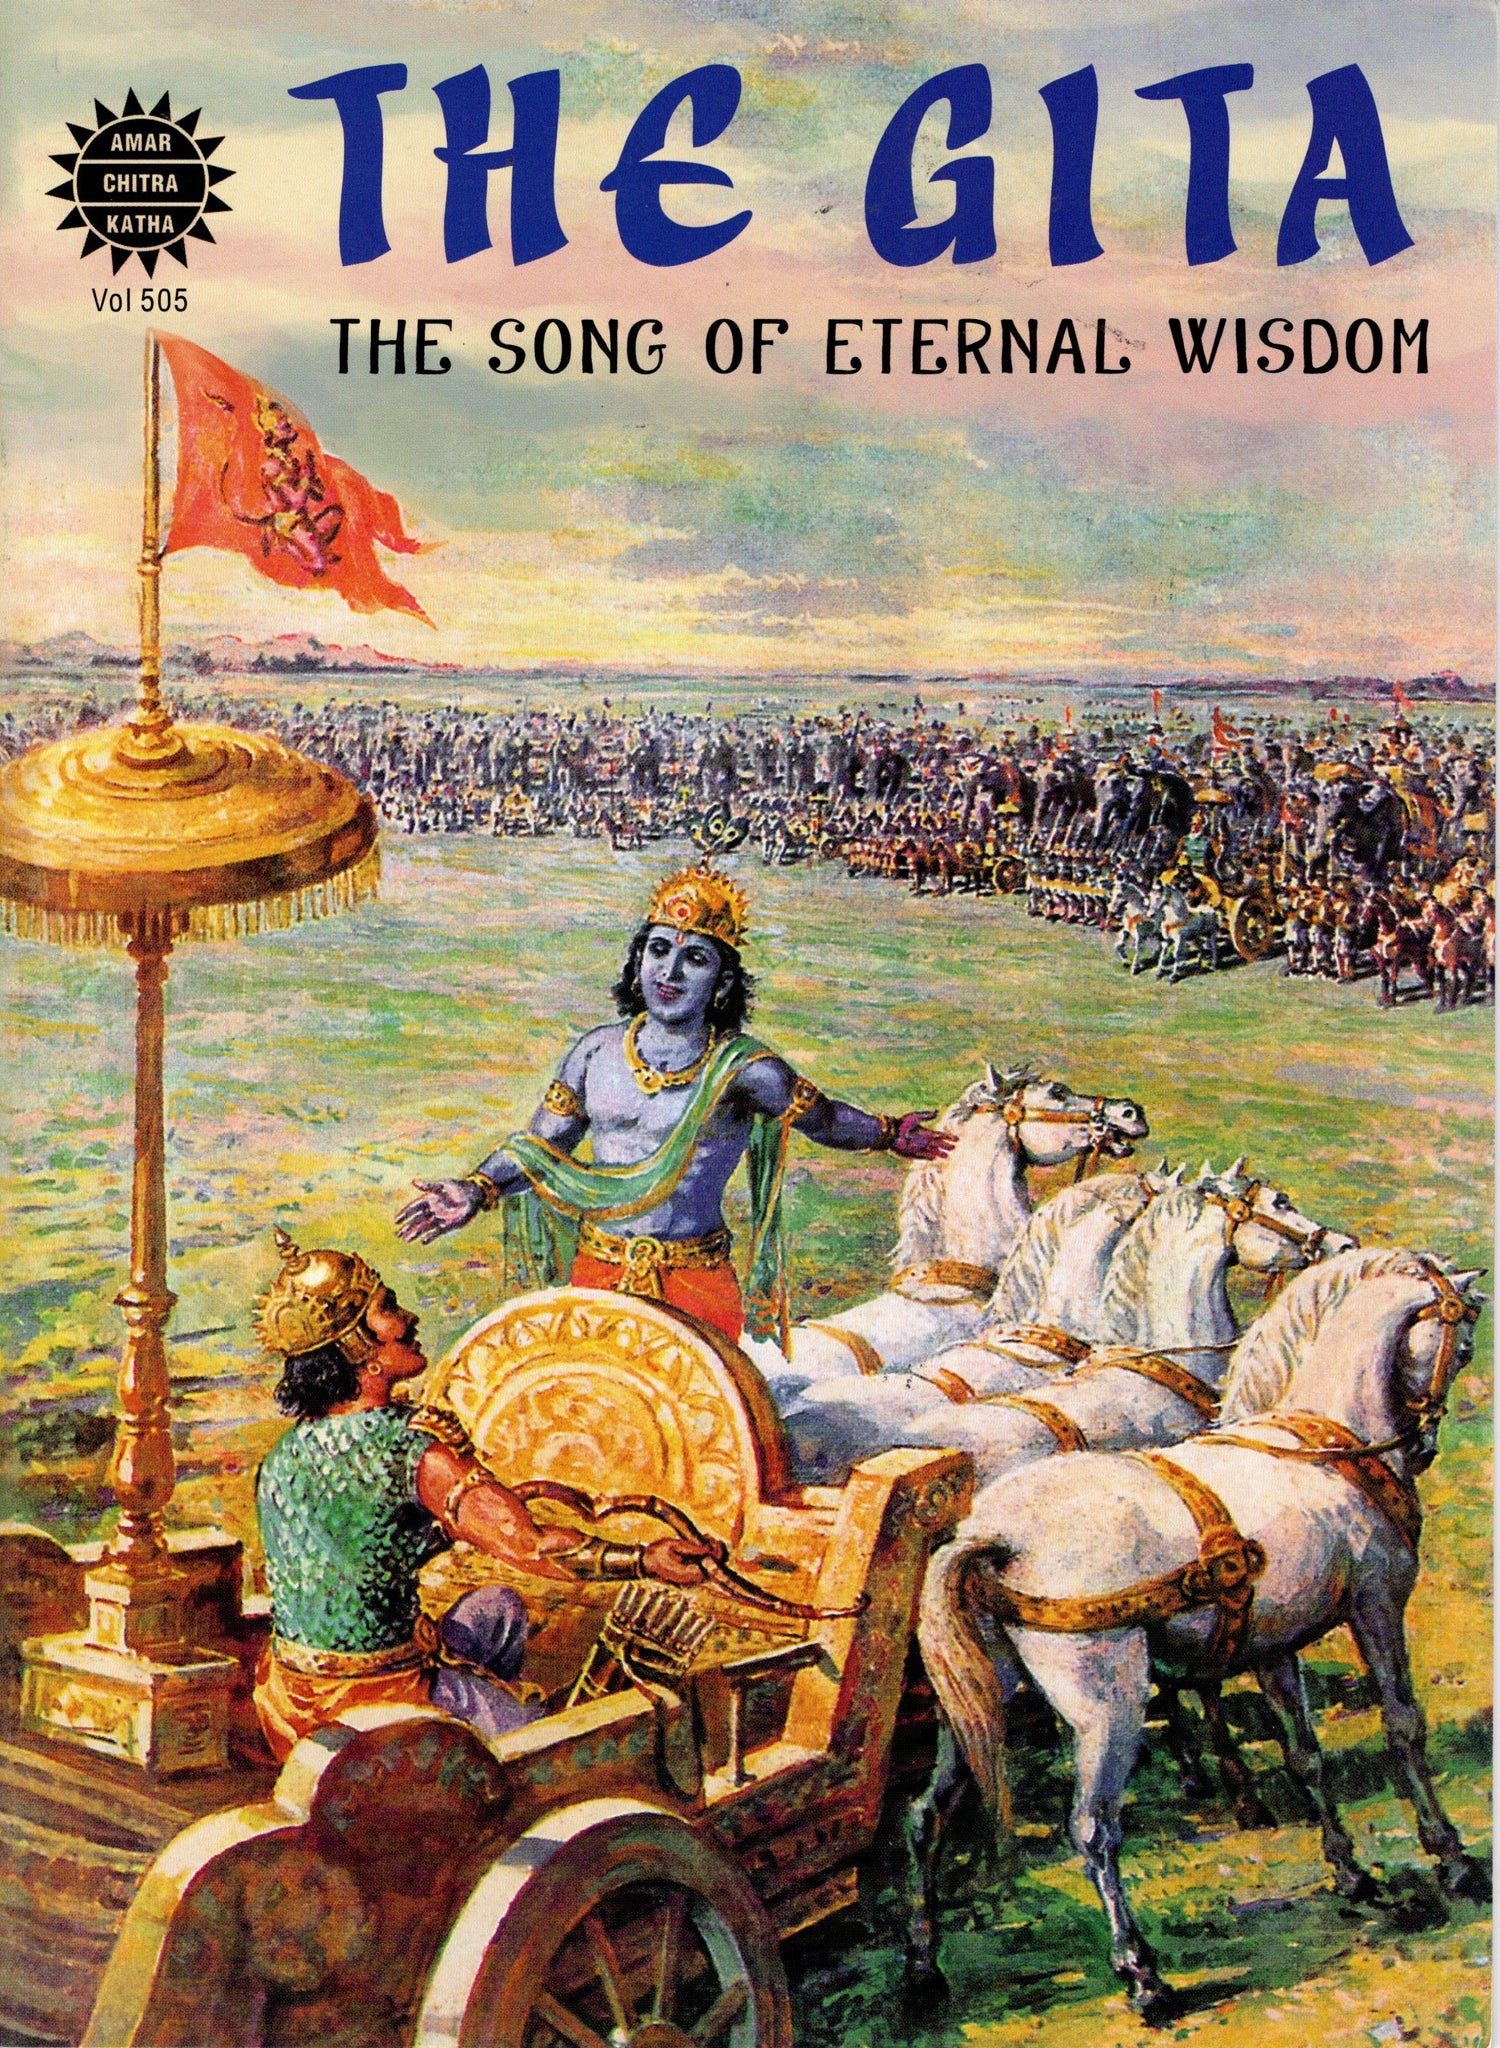 The Gita - The song of Eternal wisdom